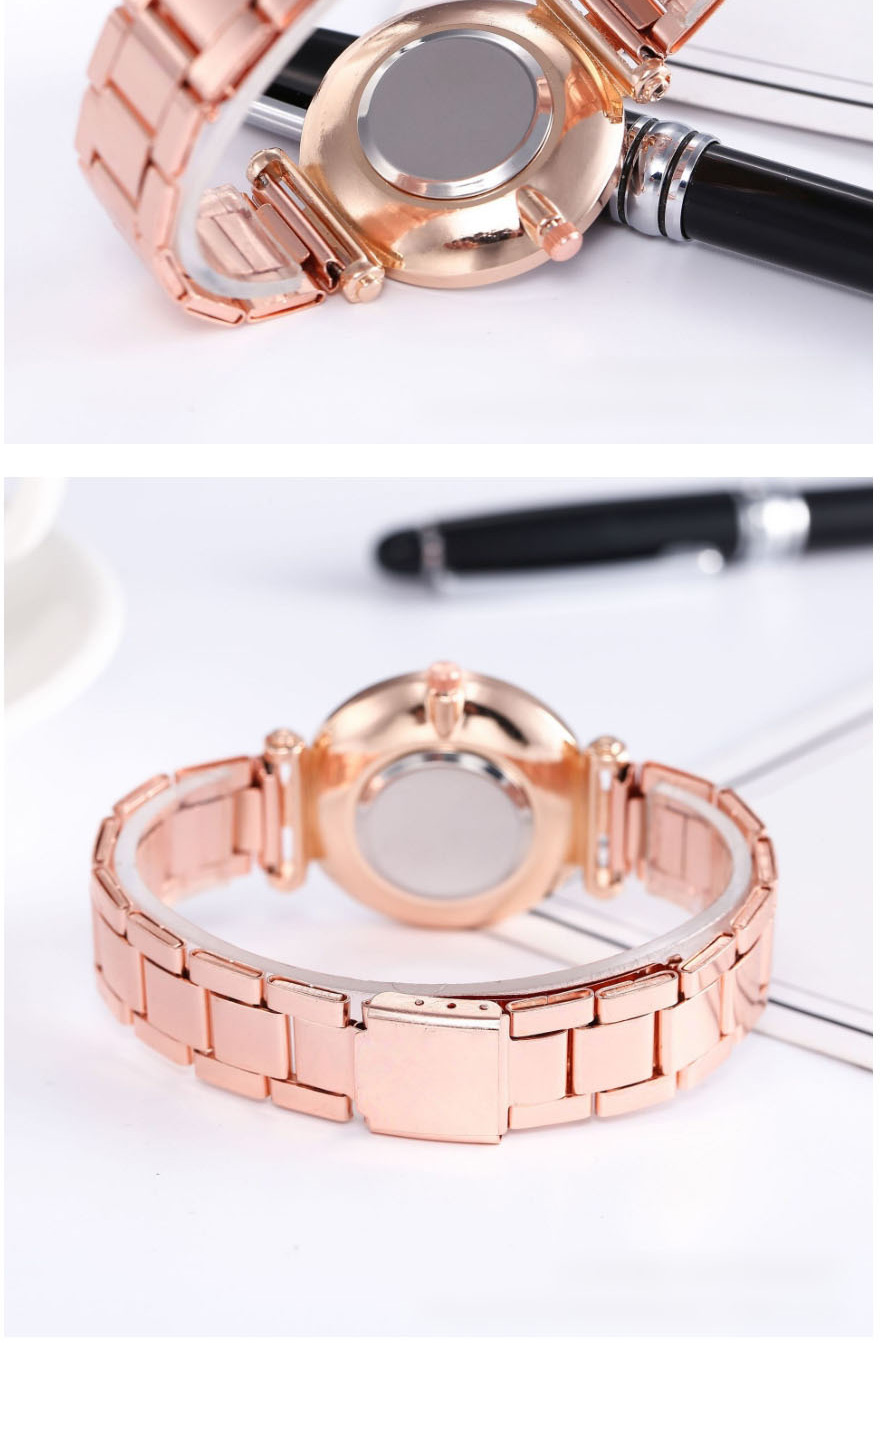 Fashion Pink Quartz Watch With Diamonds And Glitter,Ladies Watches